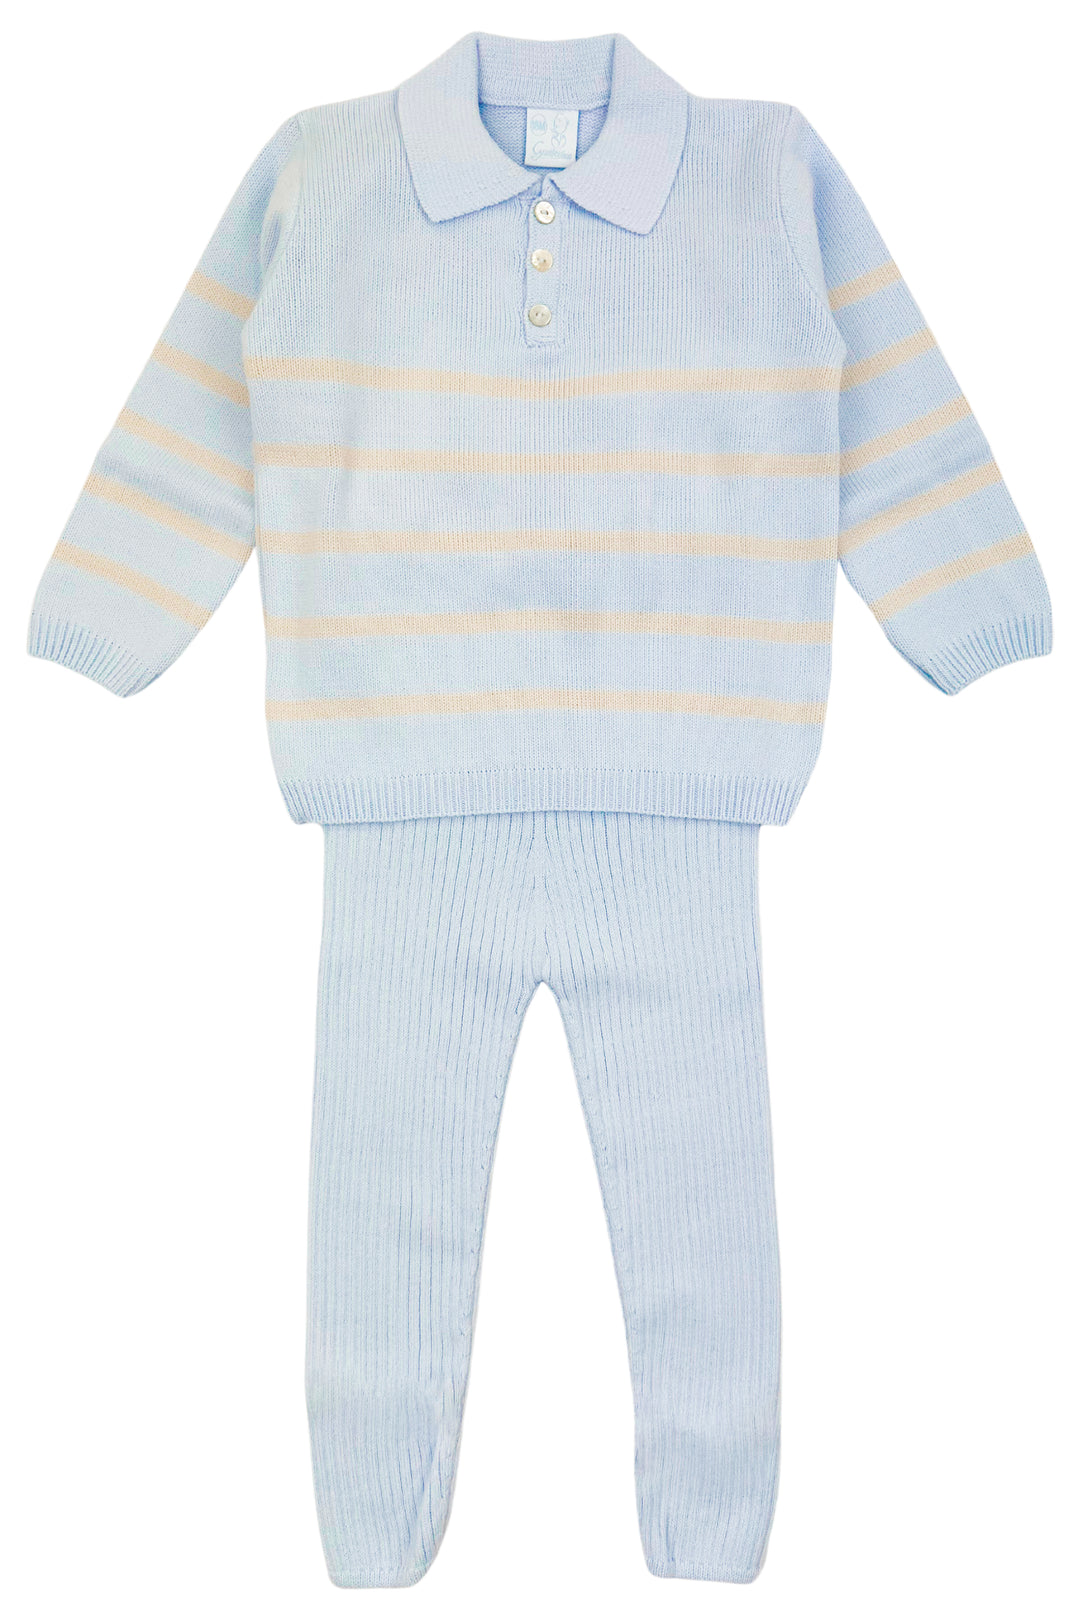 Granlei "Tommy" Blue Striped Knit Top & Leggings | Millie and John